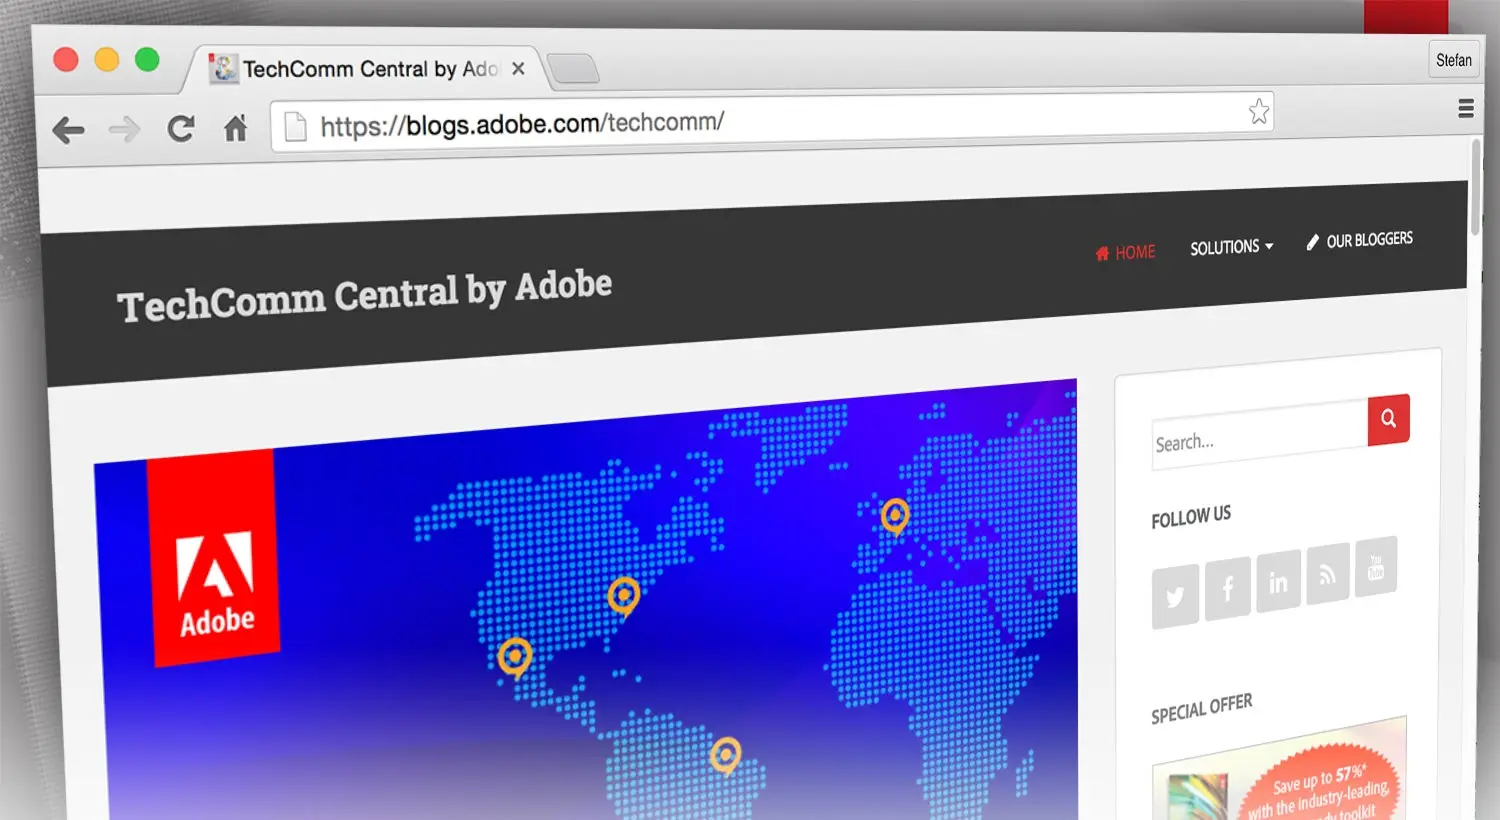 Adobe TechComm Central 2015